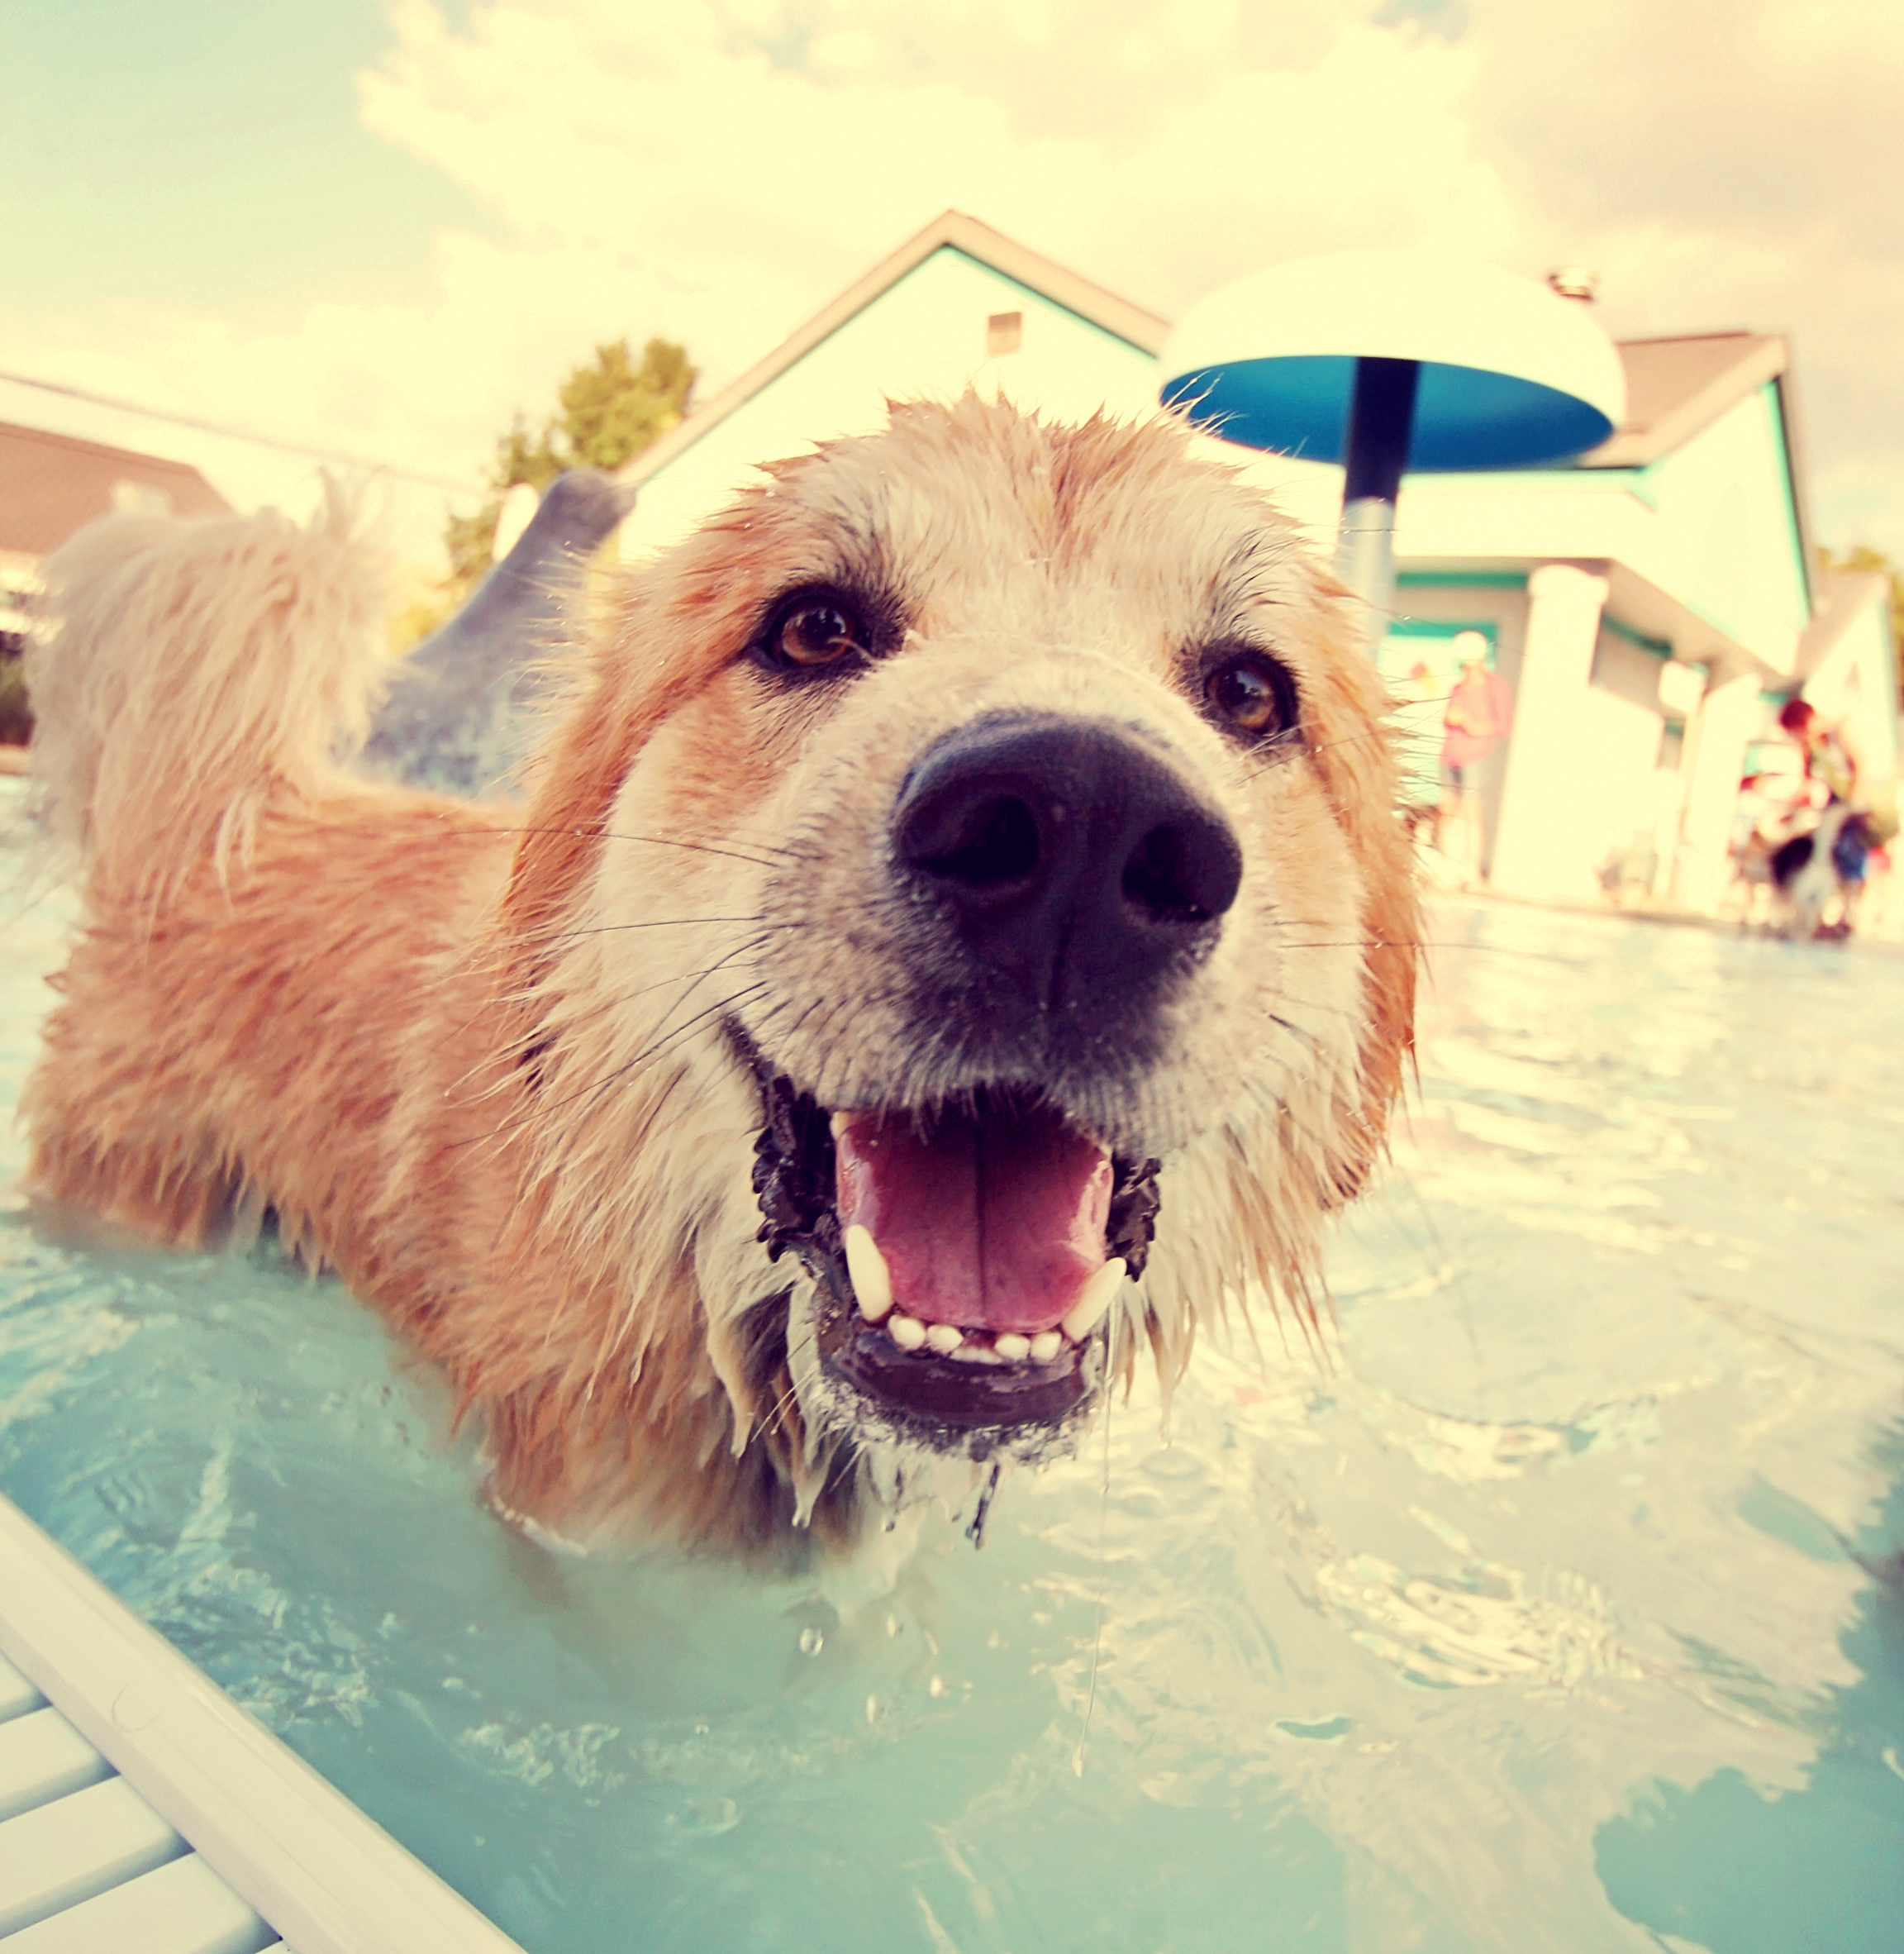 A dog joyfully swimming in a pool, enjoying a refreshing dip.